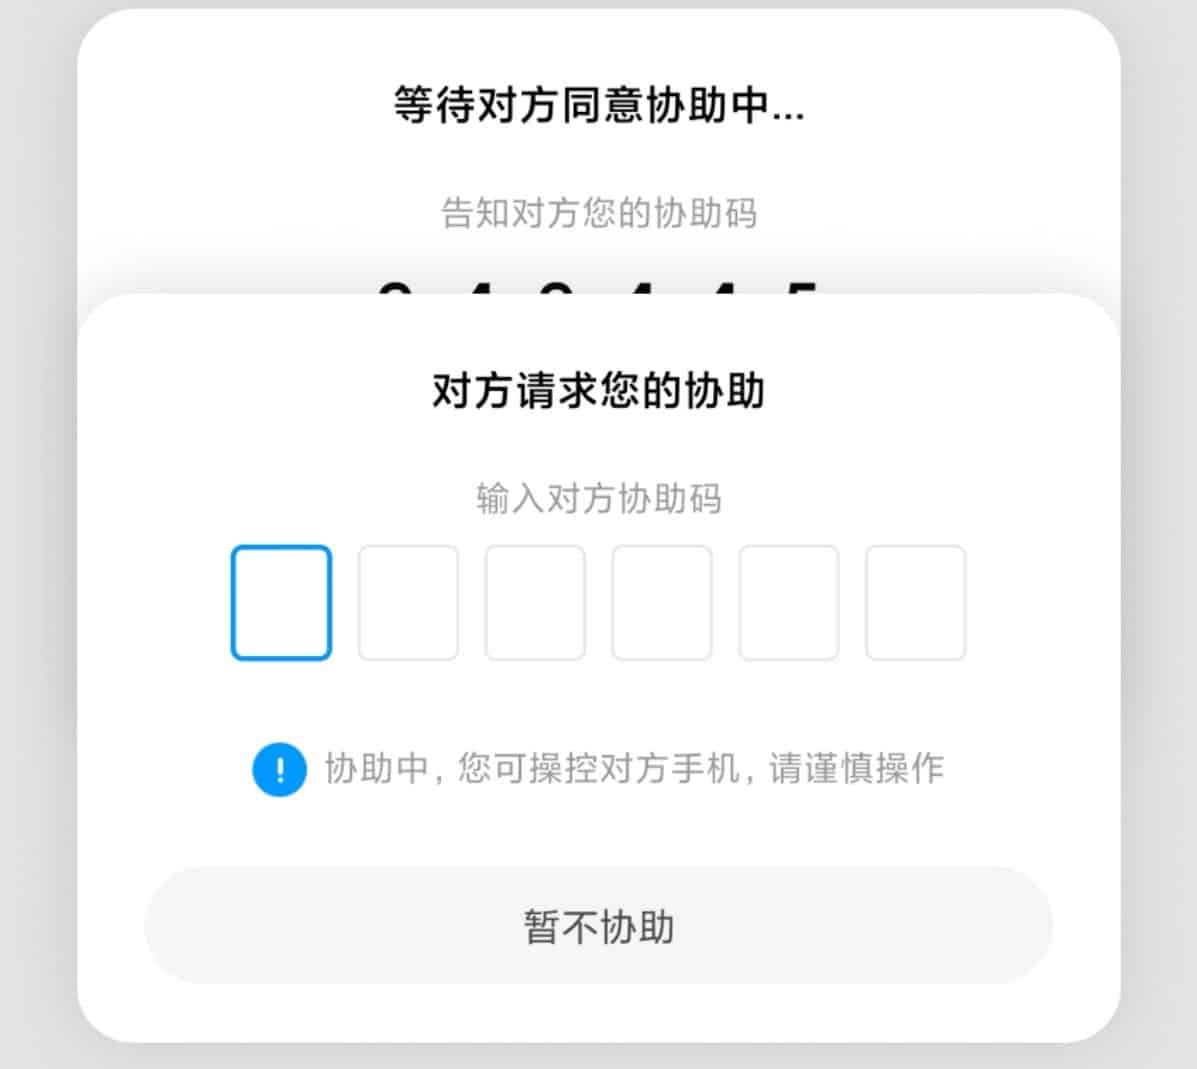 Xiaomi MIUI 12 remote assistance